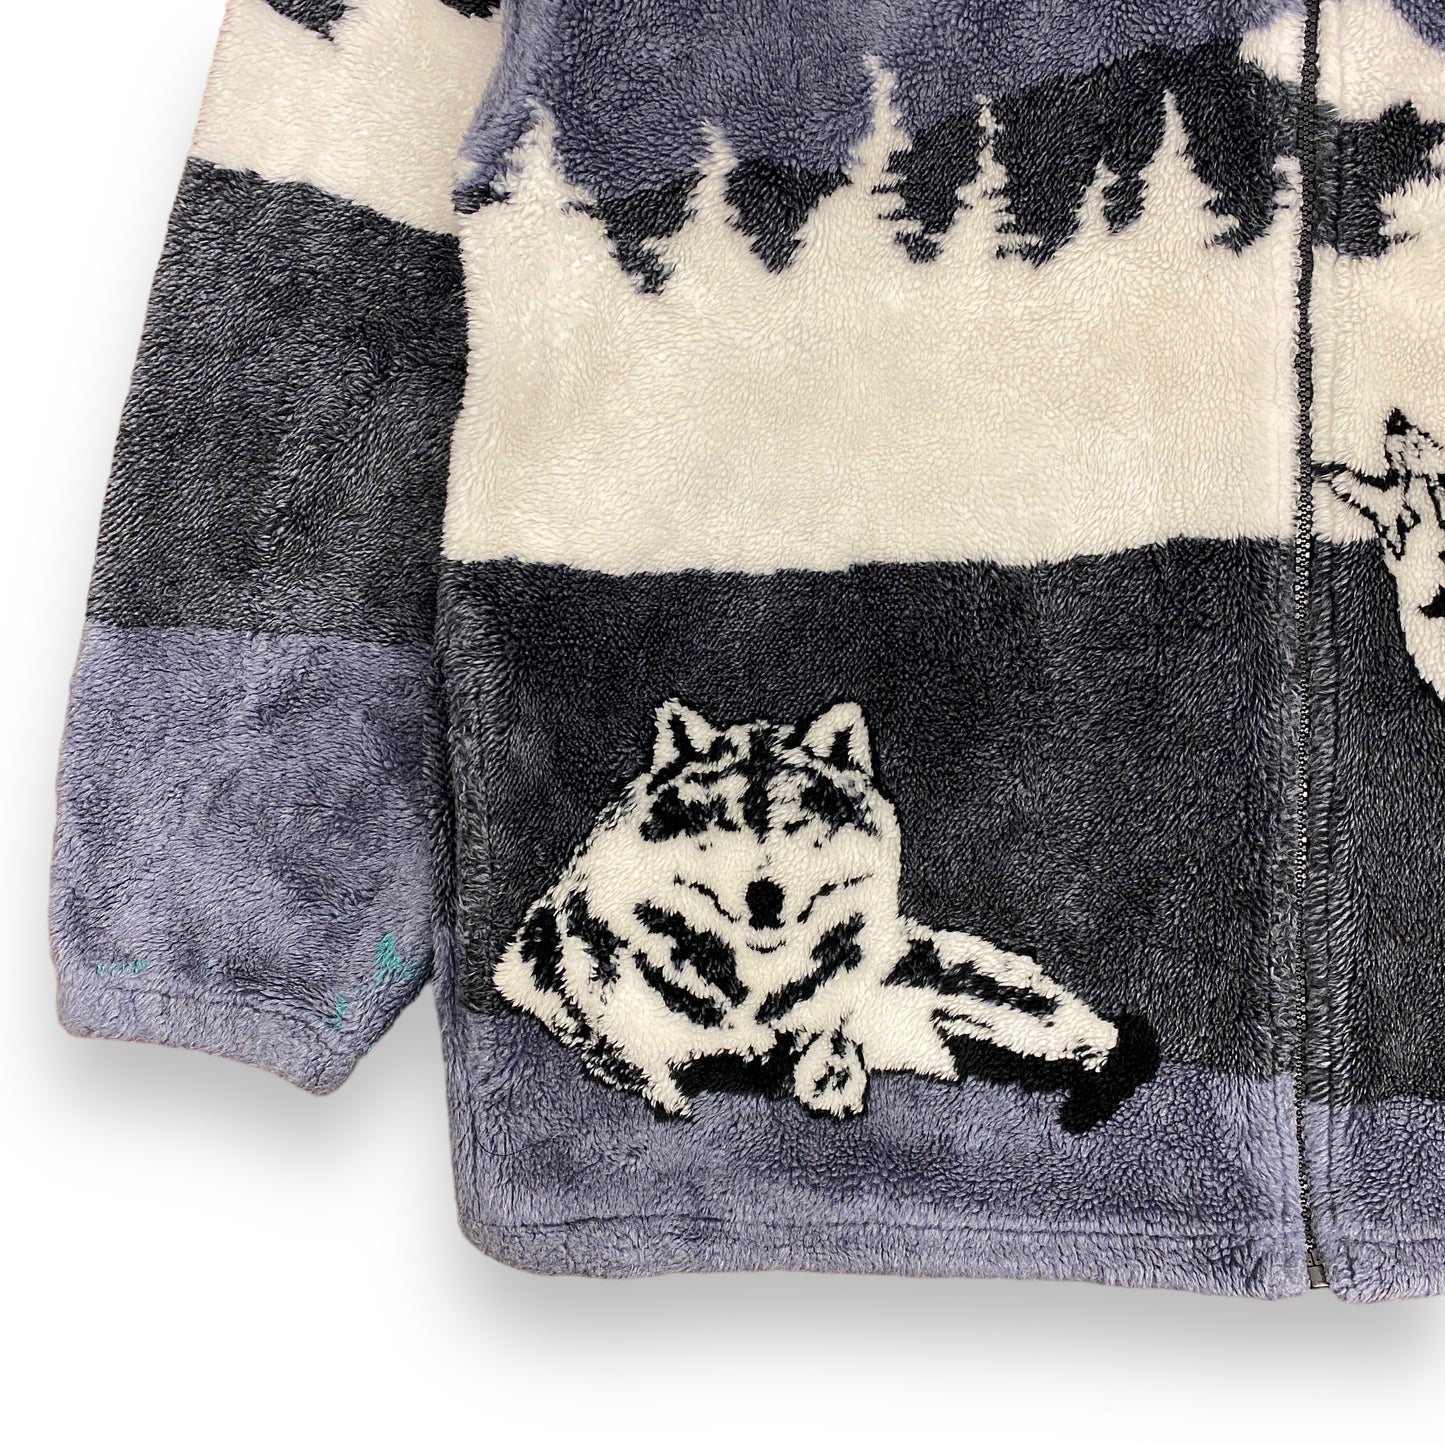 Vintage 90s All Over Print Wolf Fleece Jacket - Size Large